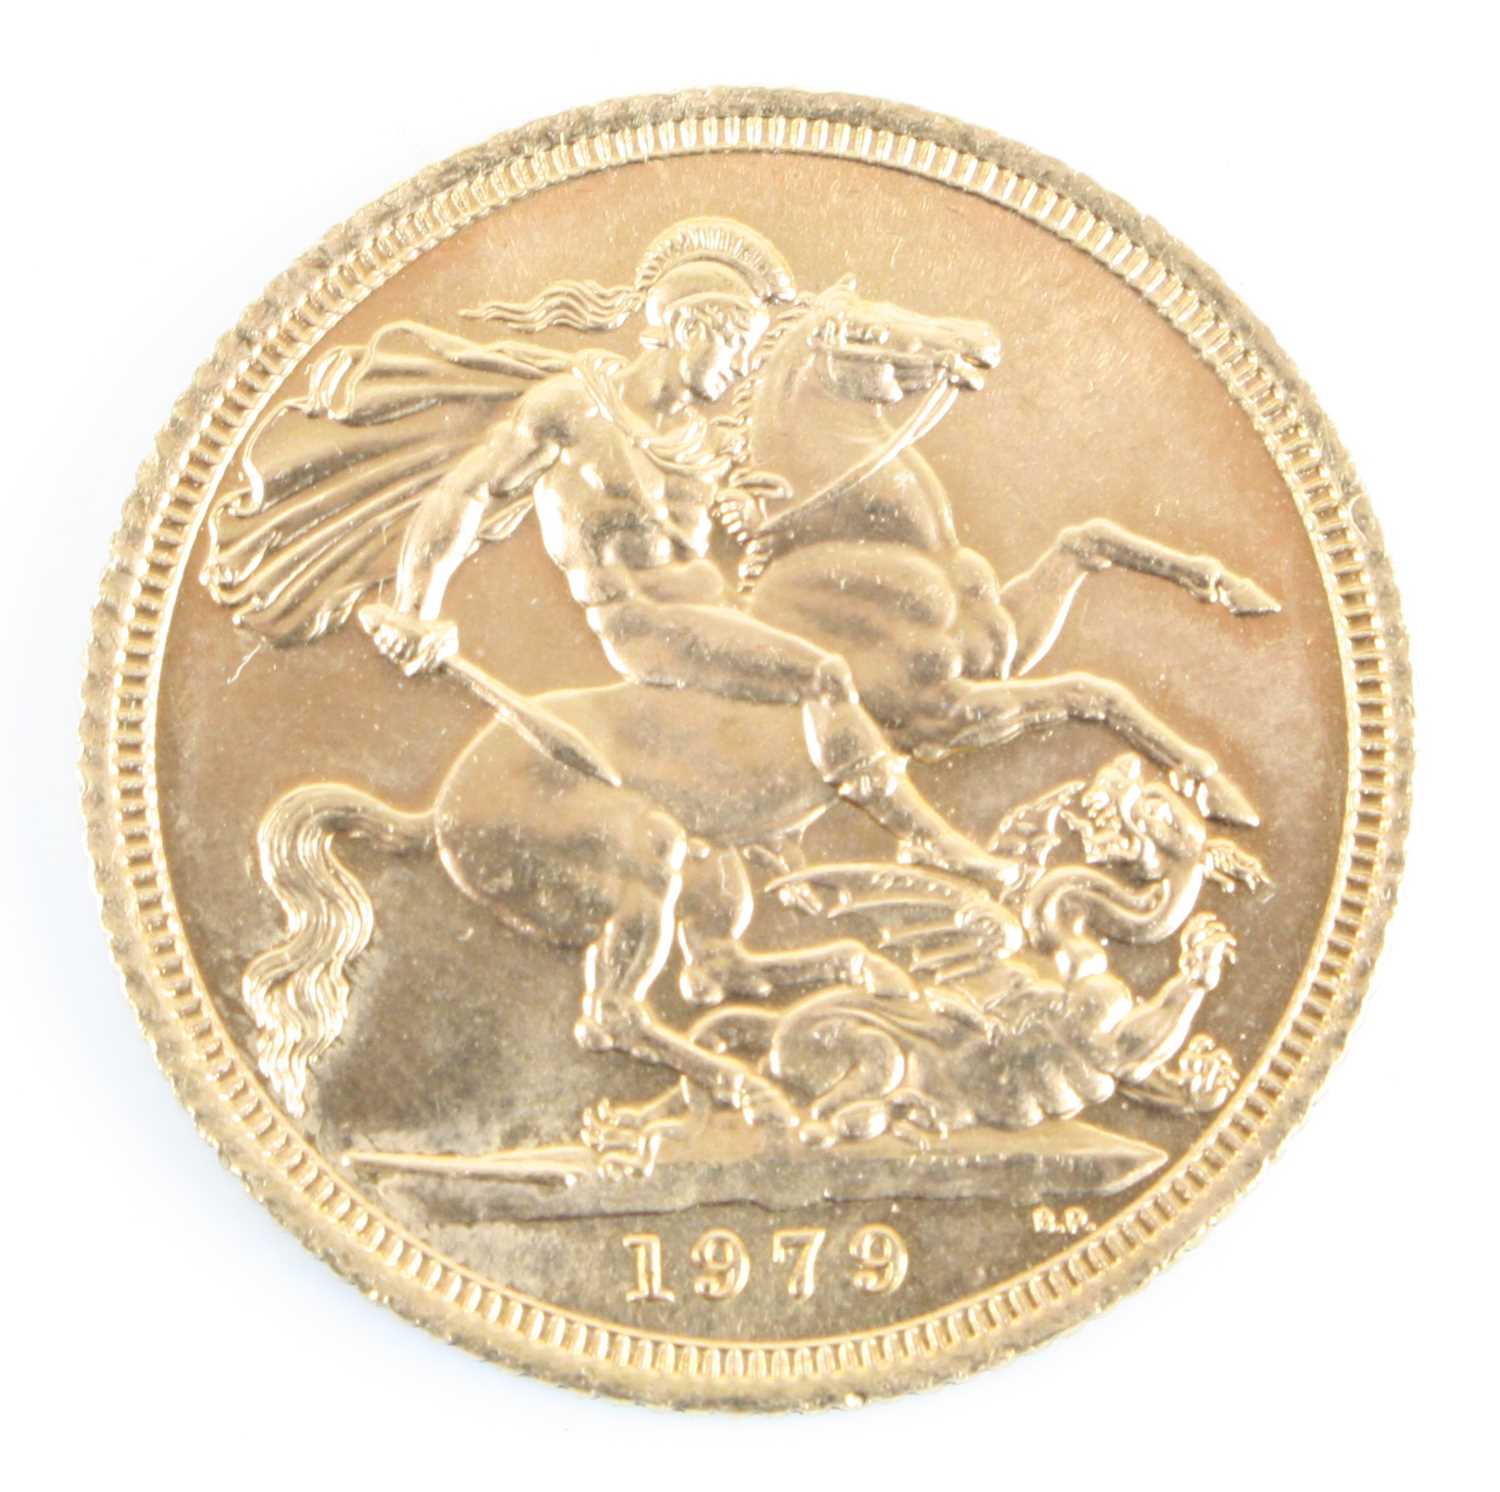 Great Britain, 1979 gold full sovereign, Elizabeth II, rev: St George and Dragon above date. (1) - Bild 2 aus 2